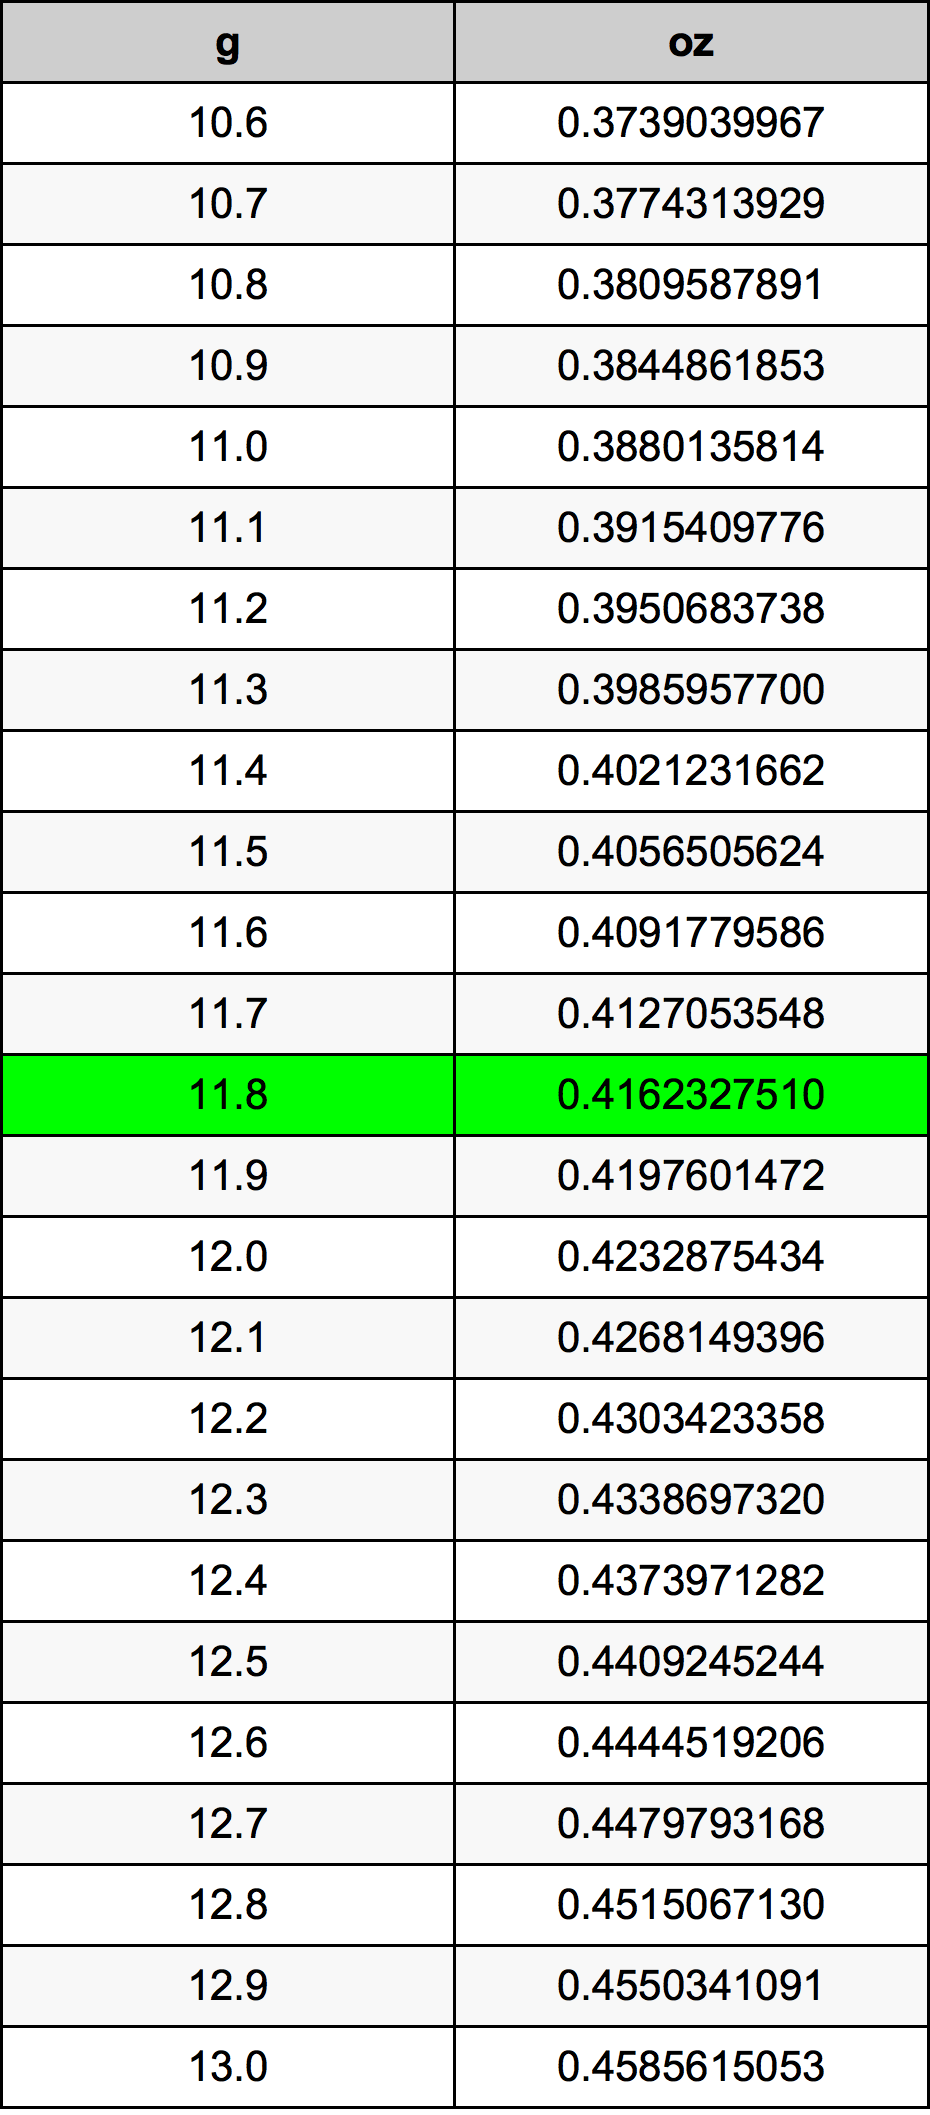 11.8 غرام جدول تحويل